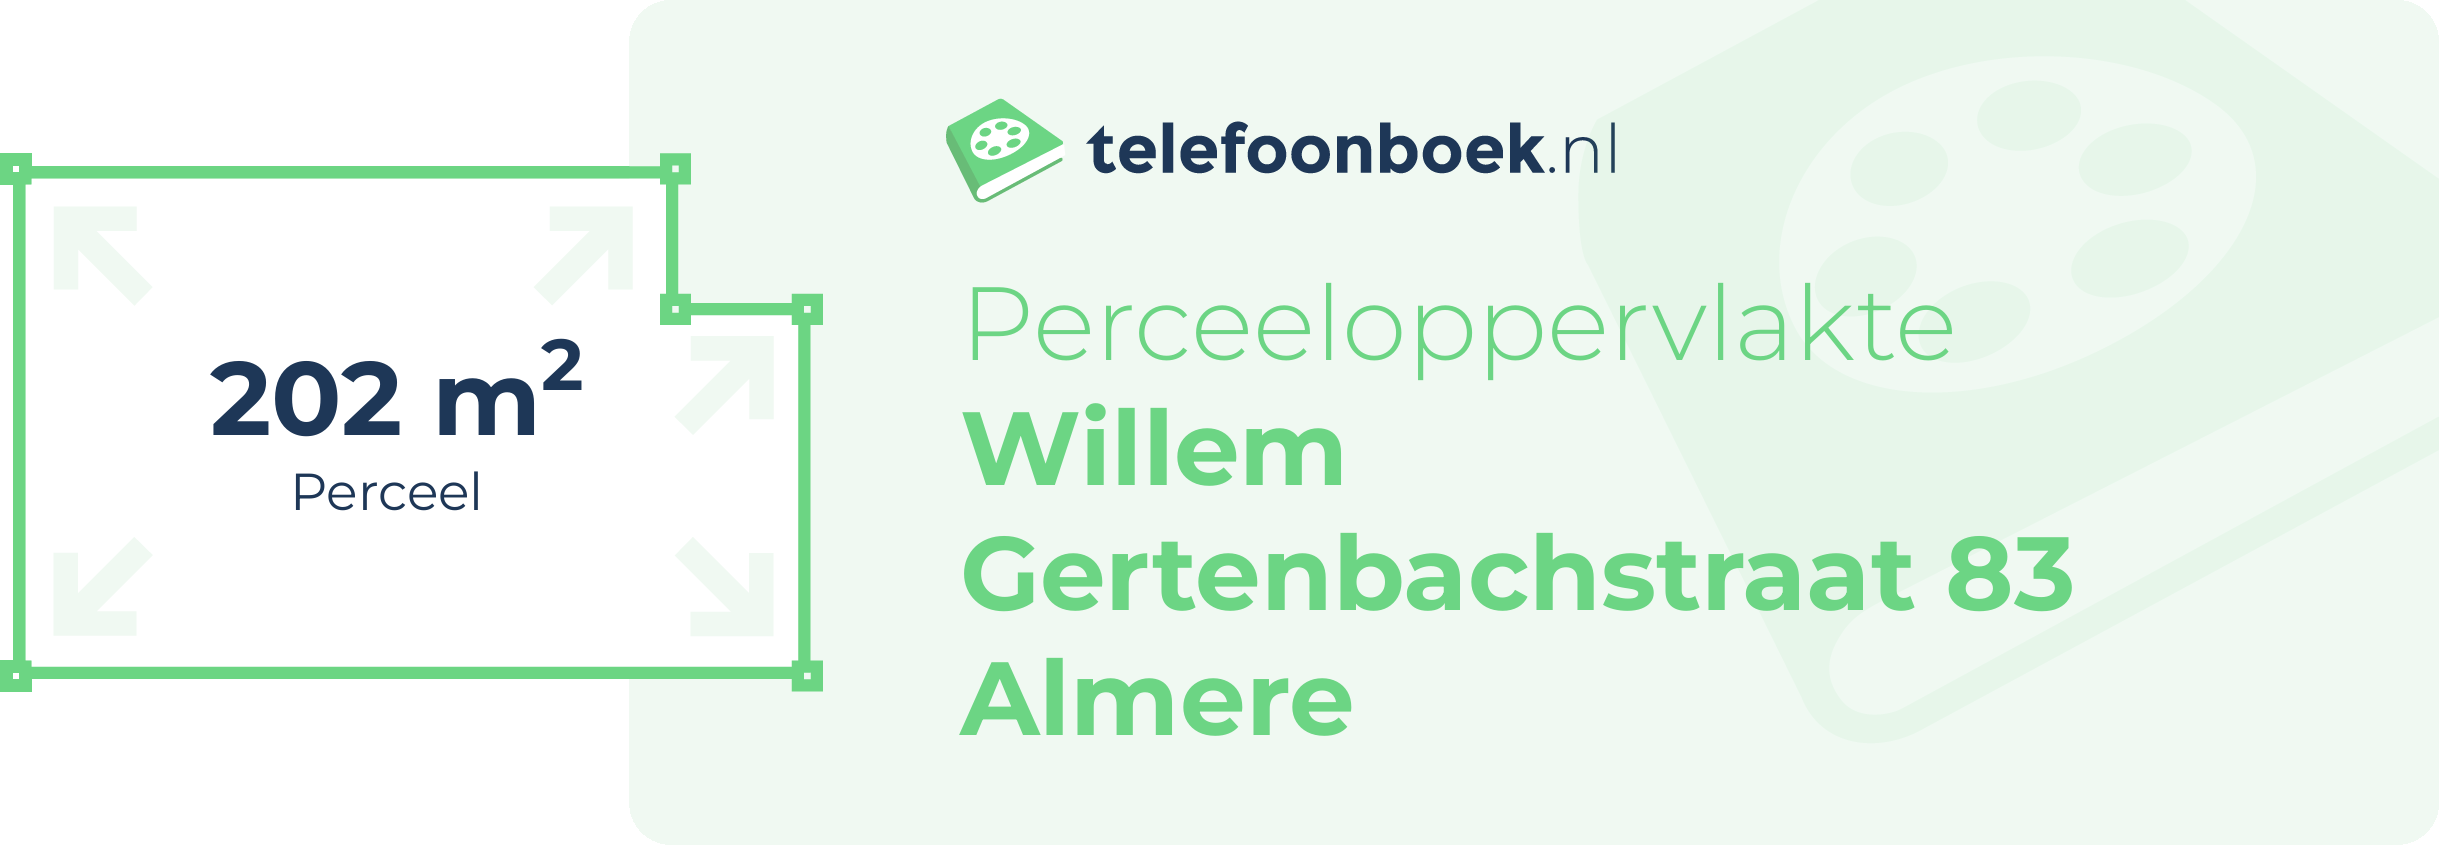 Perceeloppervlakte Willem Gertenbachstraat 83 Almere